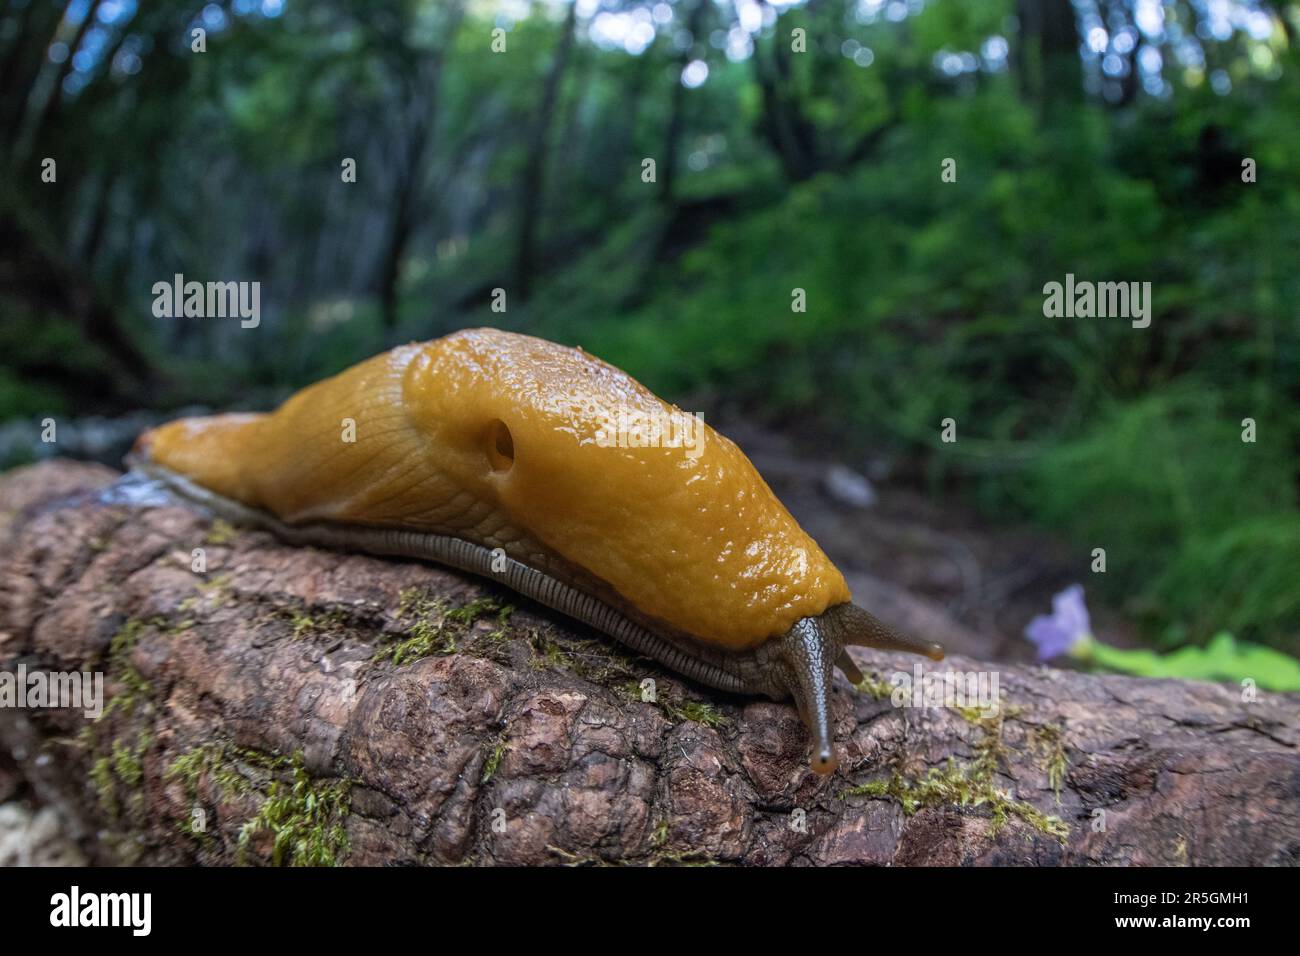 California Banana Slug, Ariolimax californicus, a large yellow mollusk from the forest of Santa Cruz in California, USA. Stock Photo